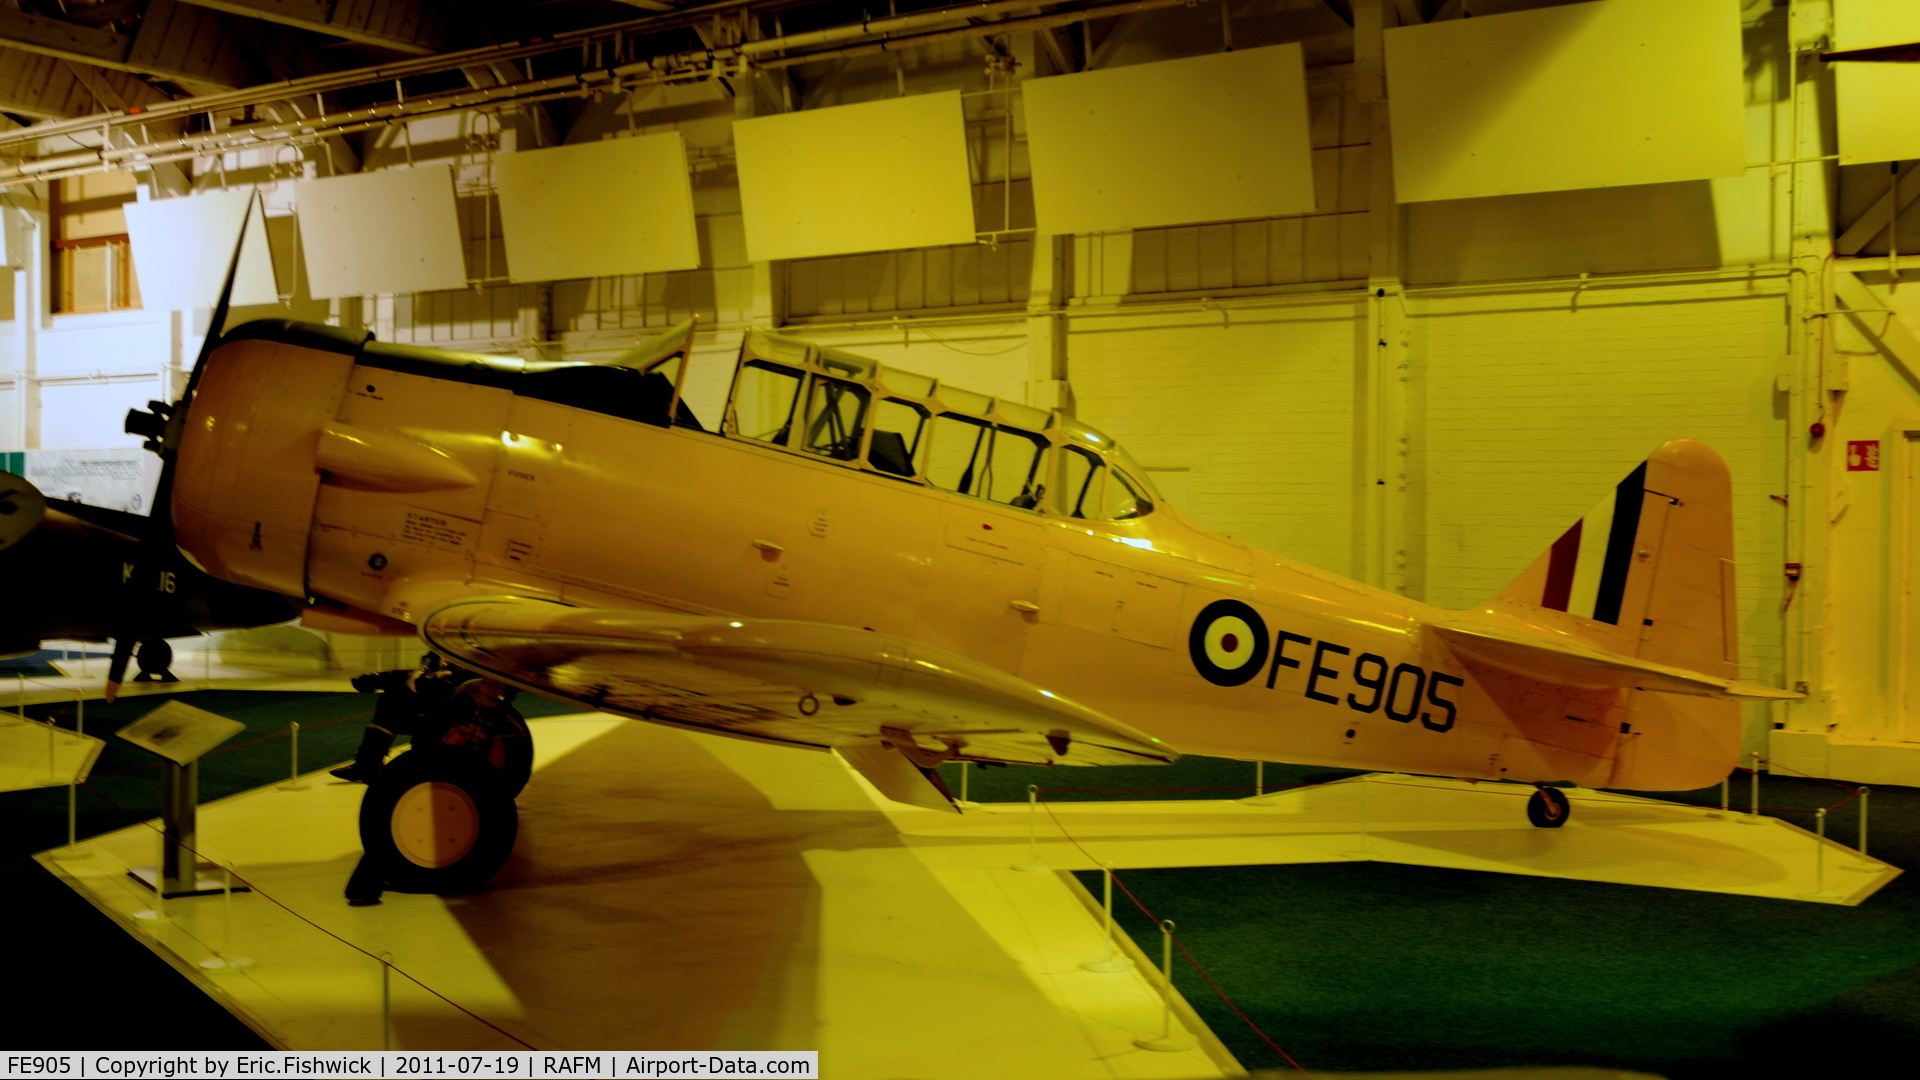 FE905, Noorduyn AT-16 Harvard IIB C/N 14-639, FE905 at the RAF Museum, Hendon, London.